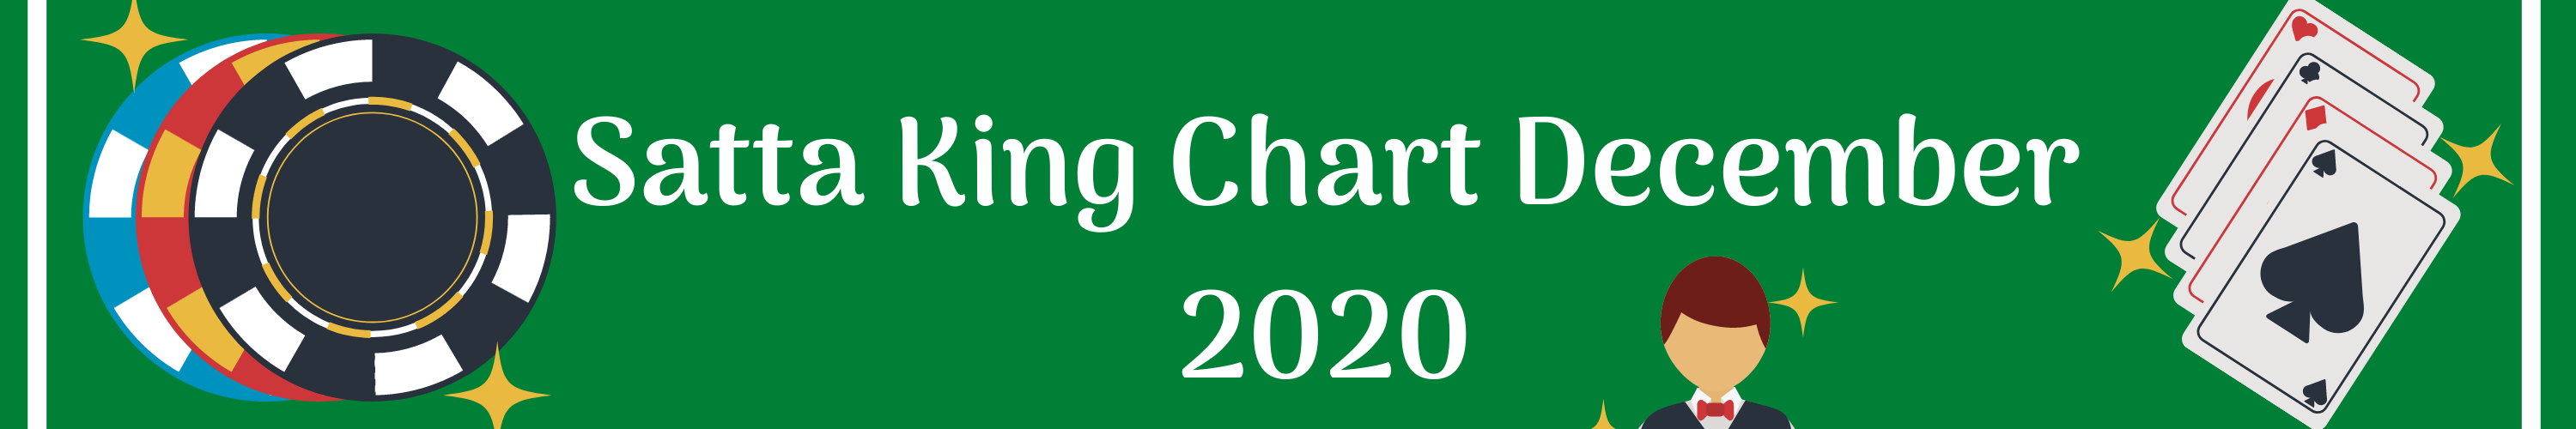 Satta King Chart December 2020